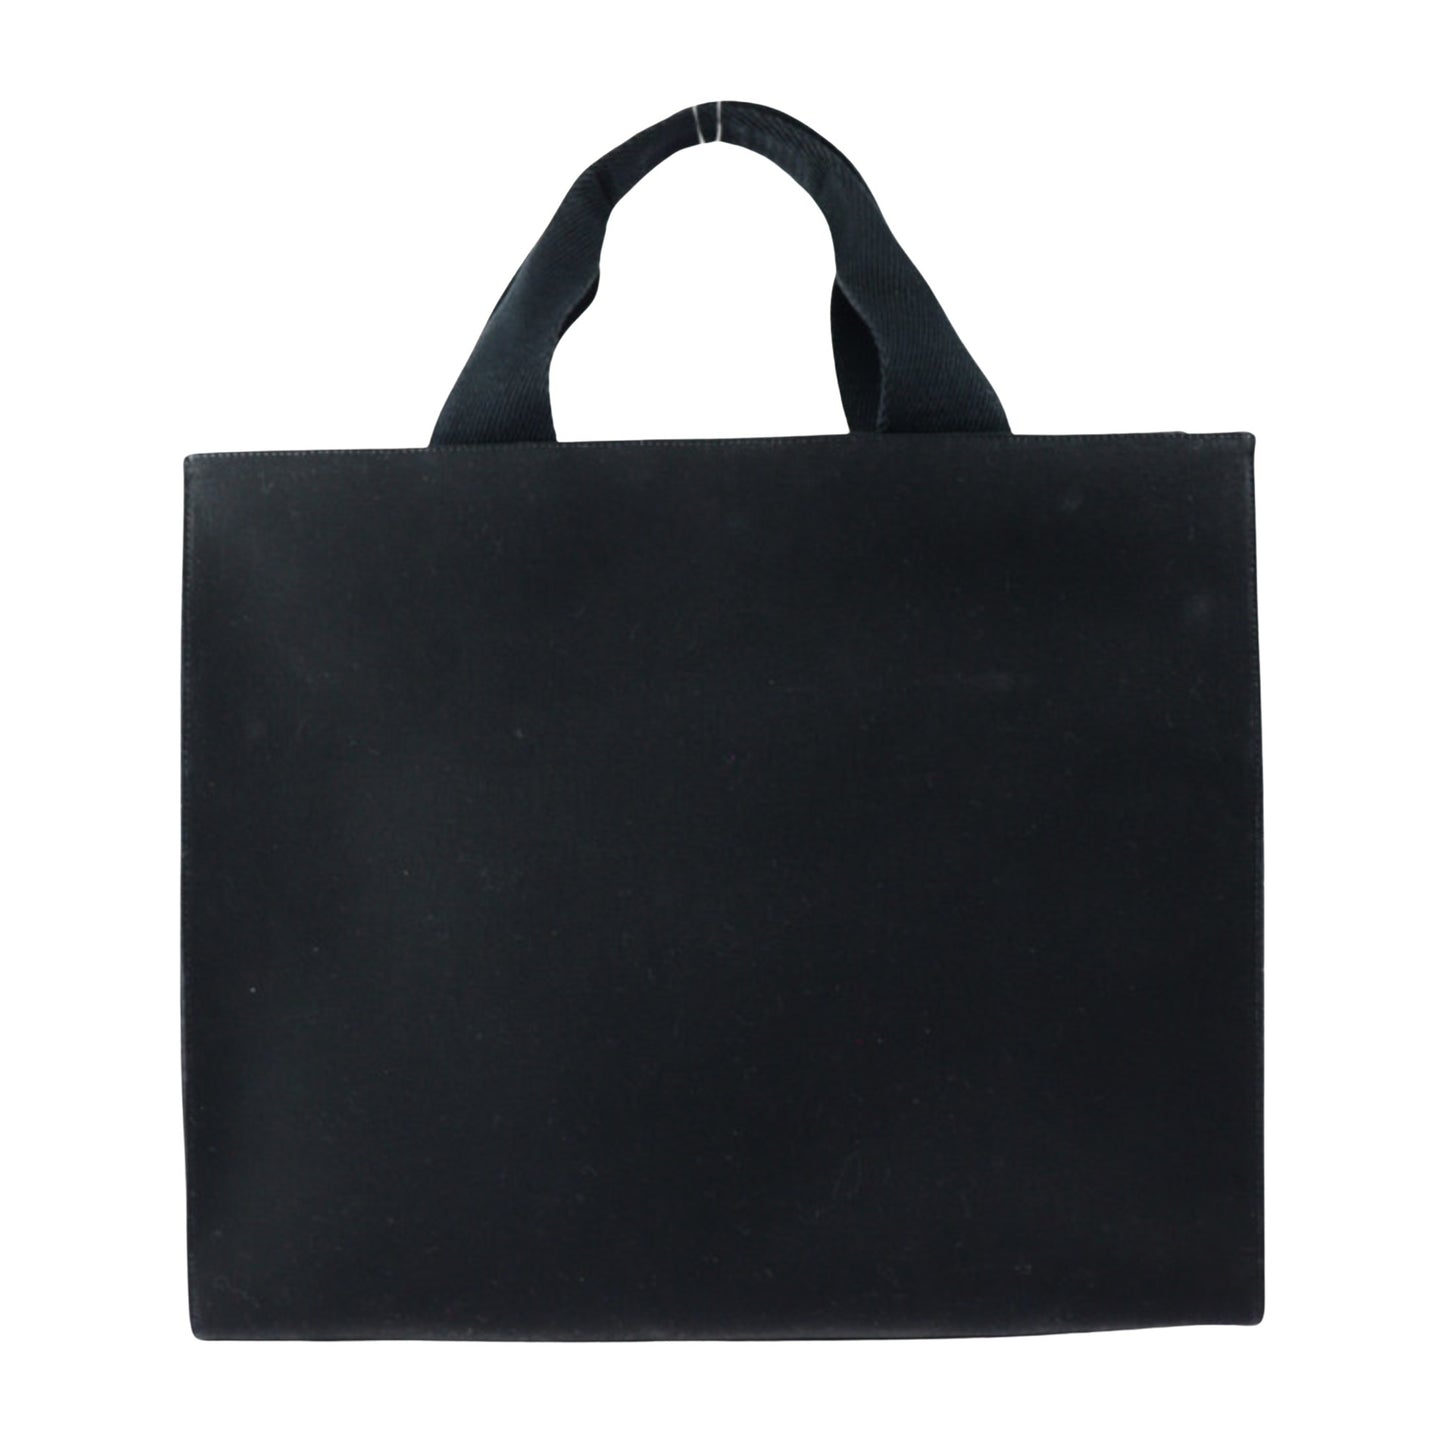 Fendi Women's Versatile Black Canvas Handbag/Shoulder Bag/Tote Bag by Fendi in Black